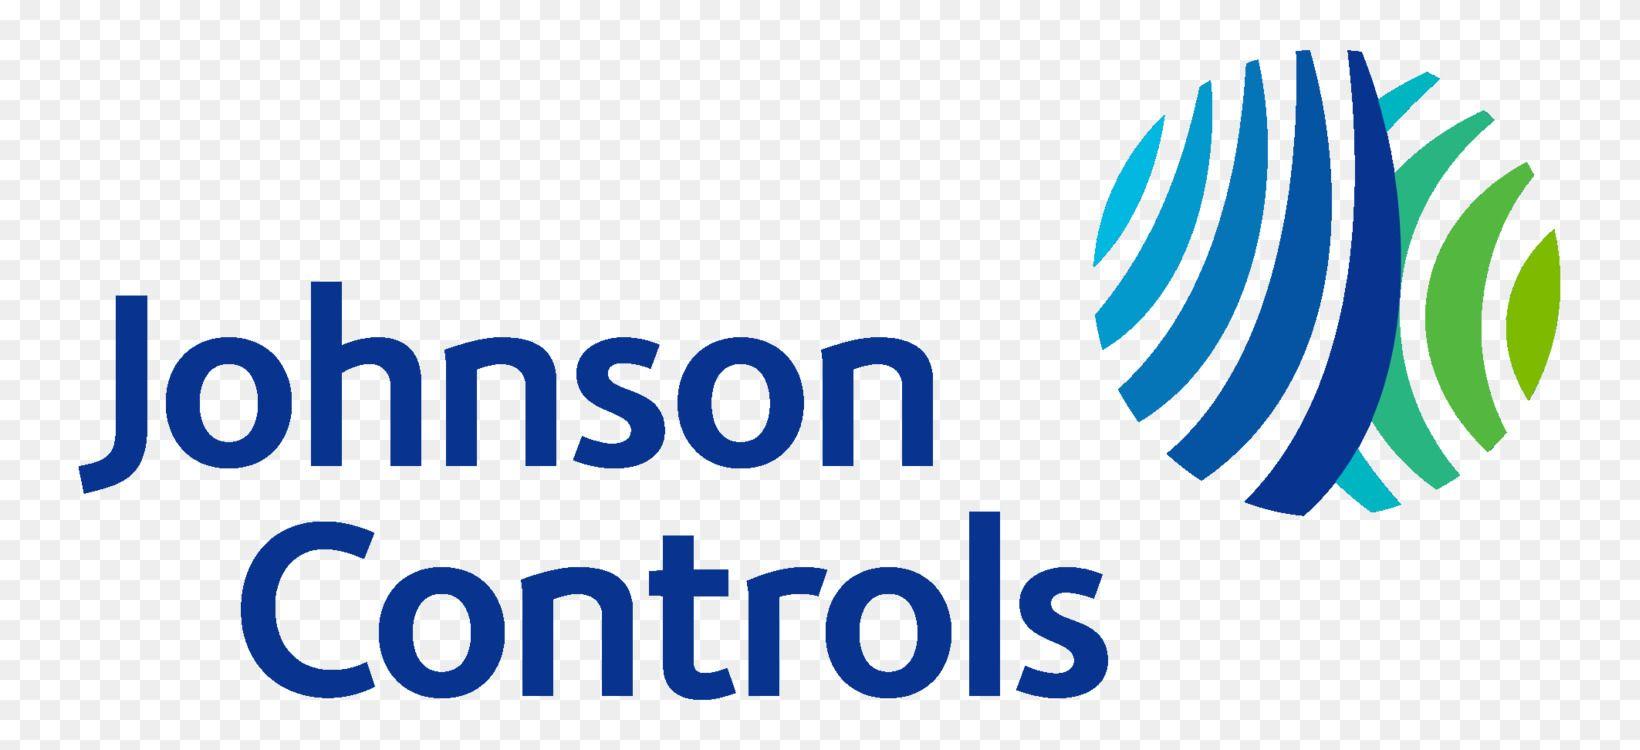 Business Organization Logo - Johnson Controls Business Logo Organization PR Newswire Free PNG ...